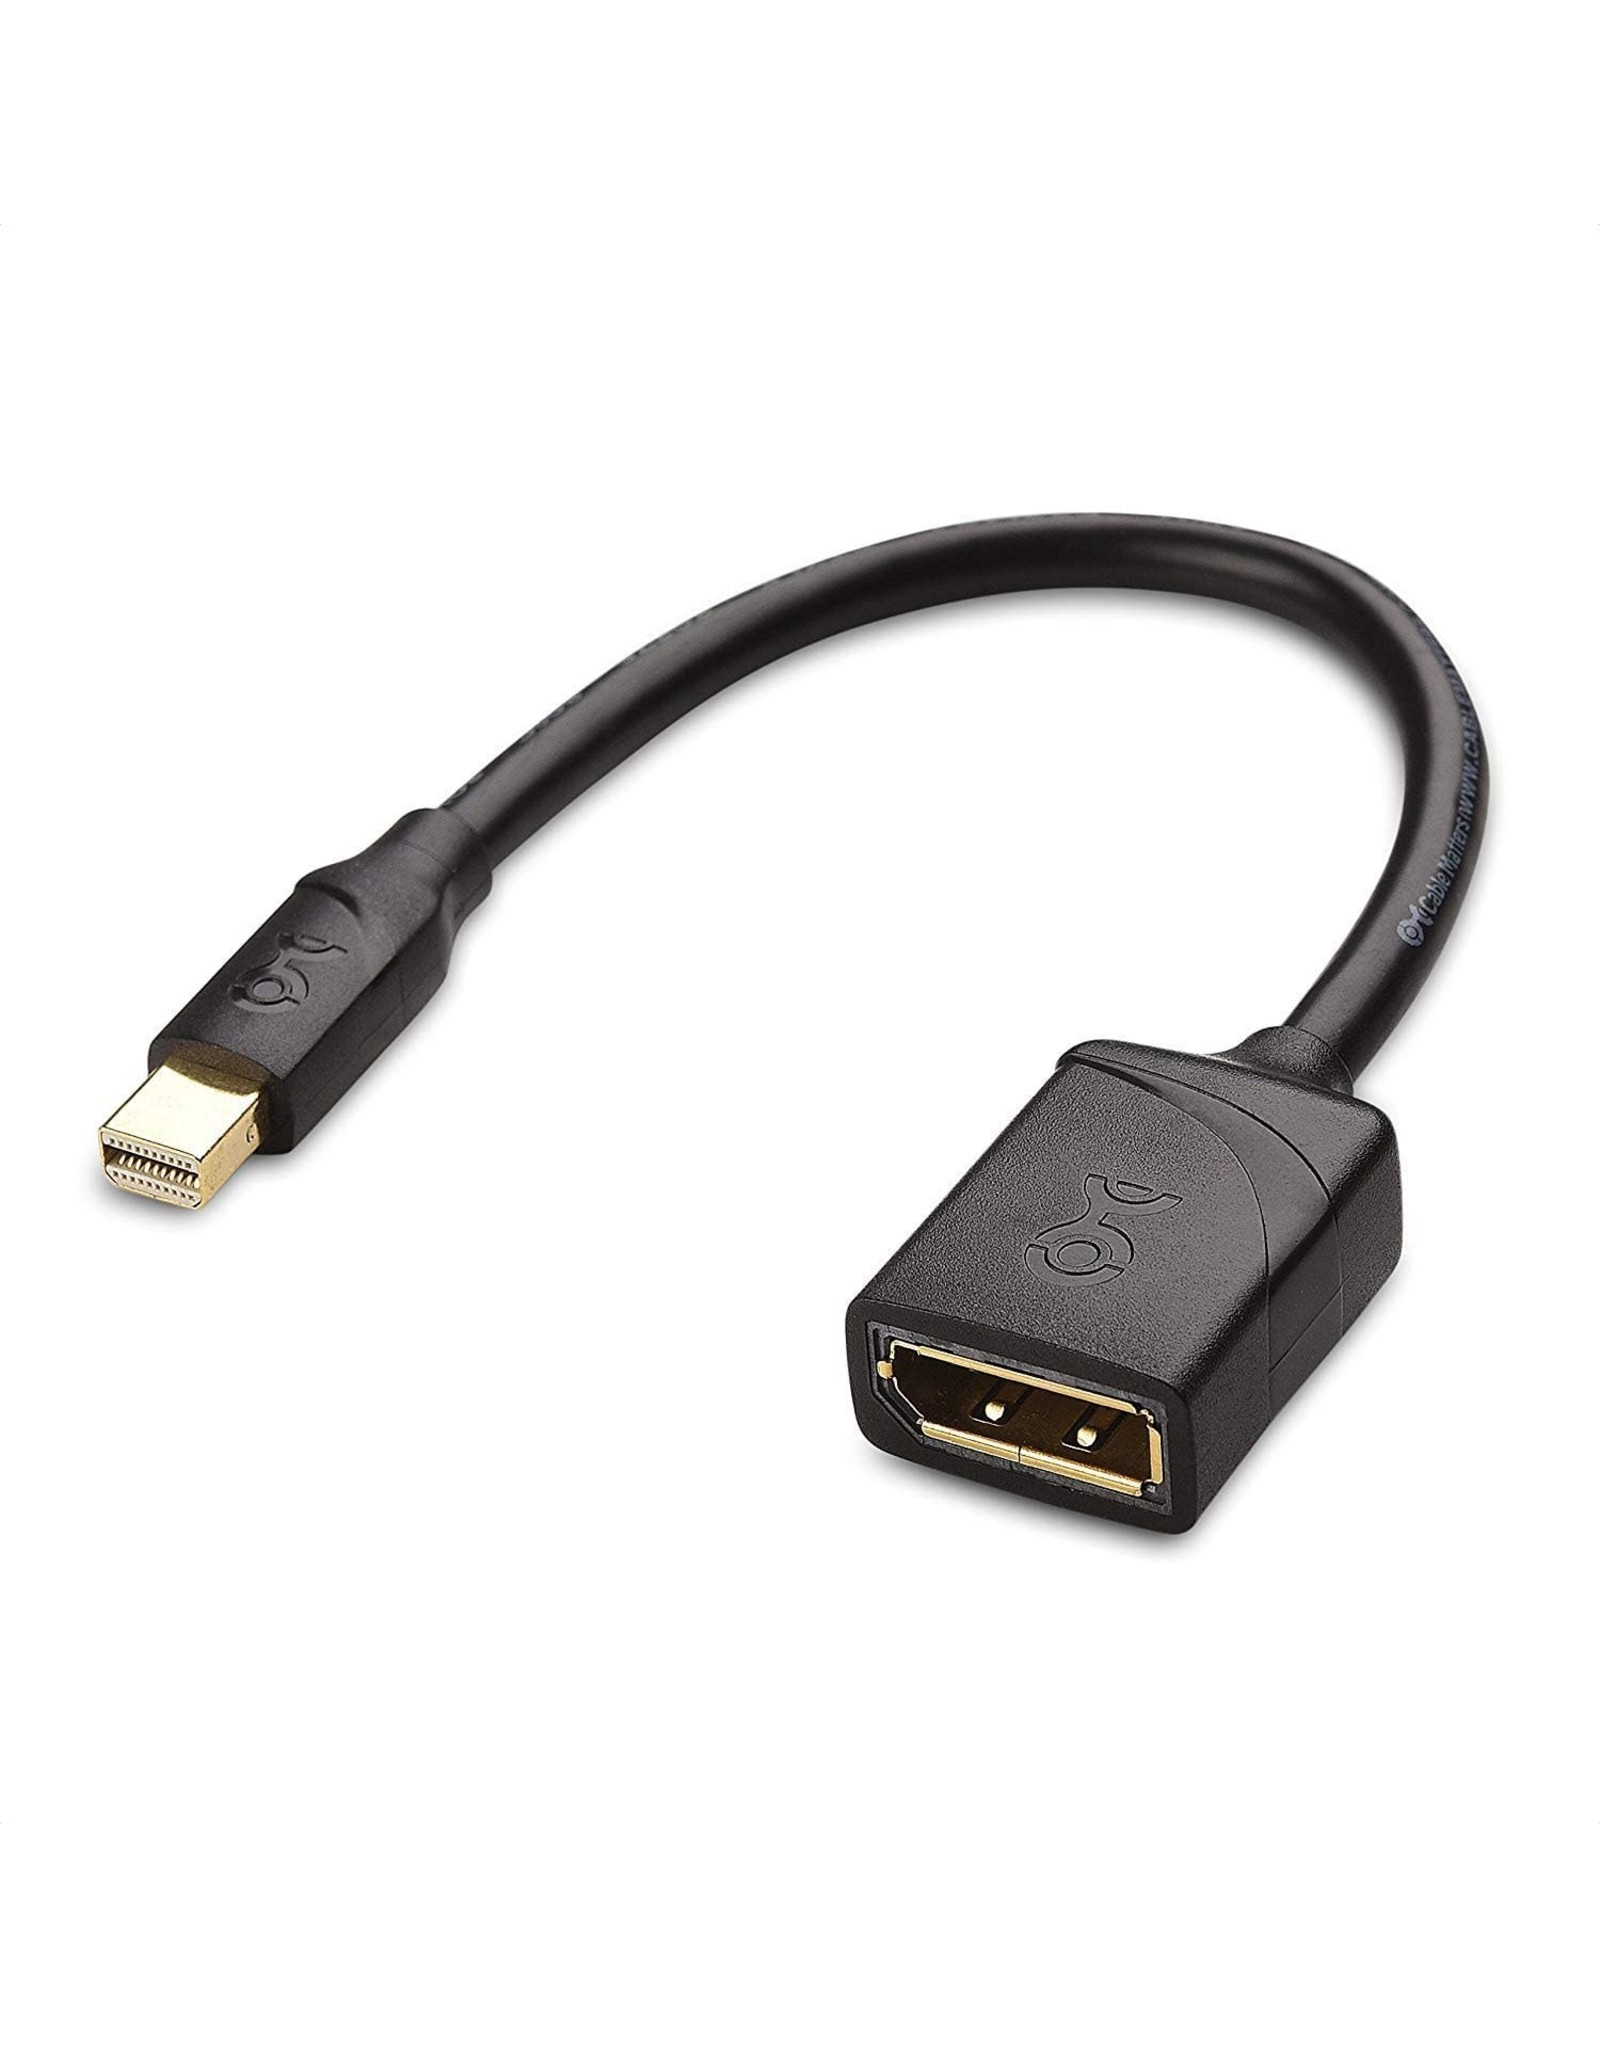 Amazon (Cable Matters) Mini DisplayPort to DisplayPort Adapter